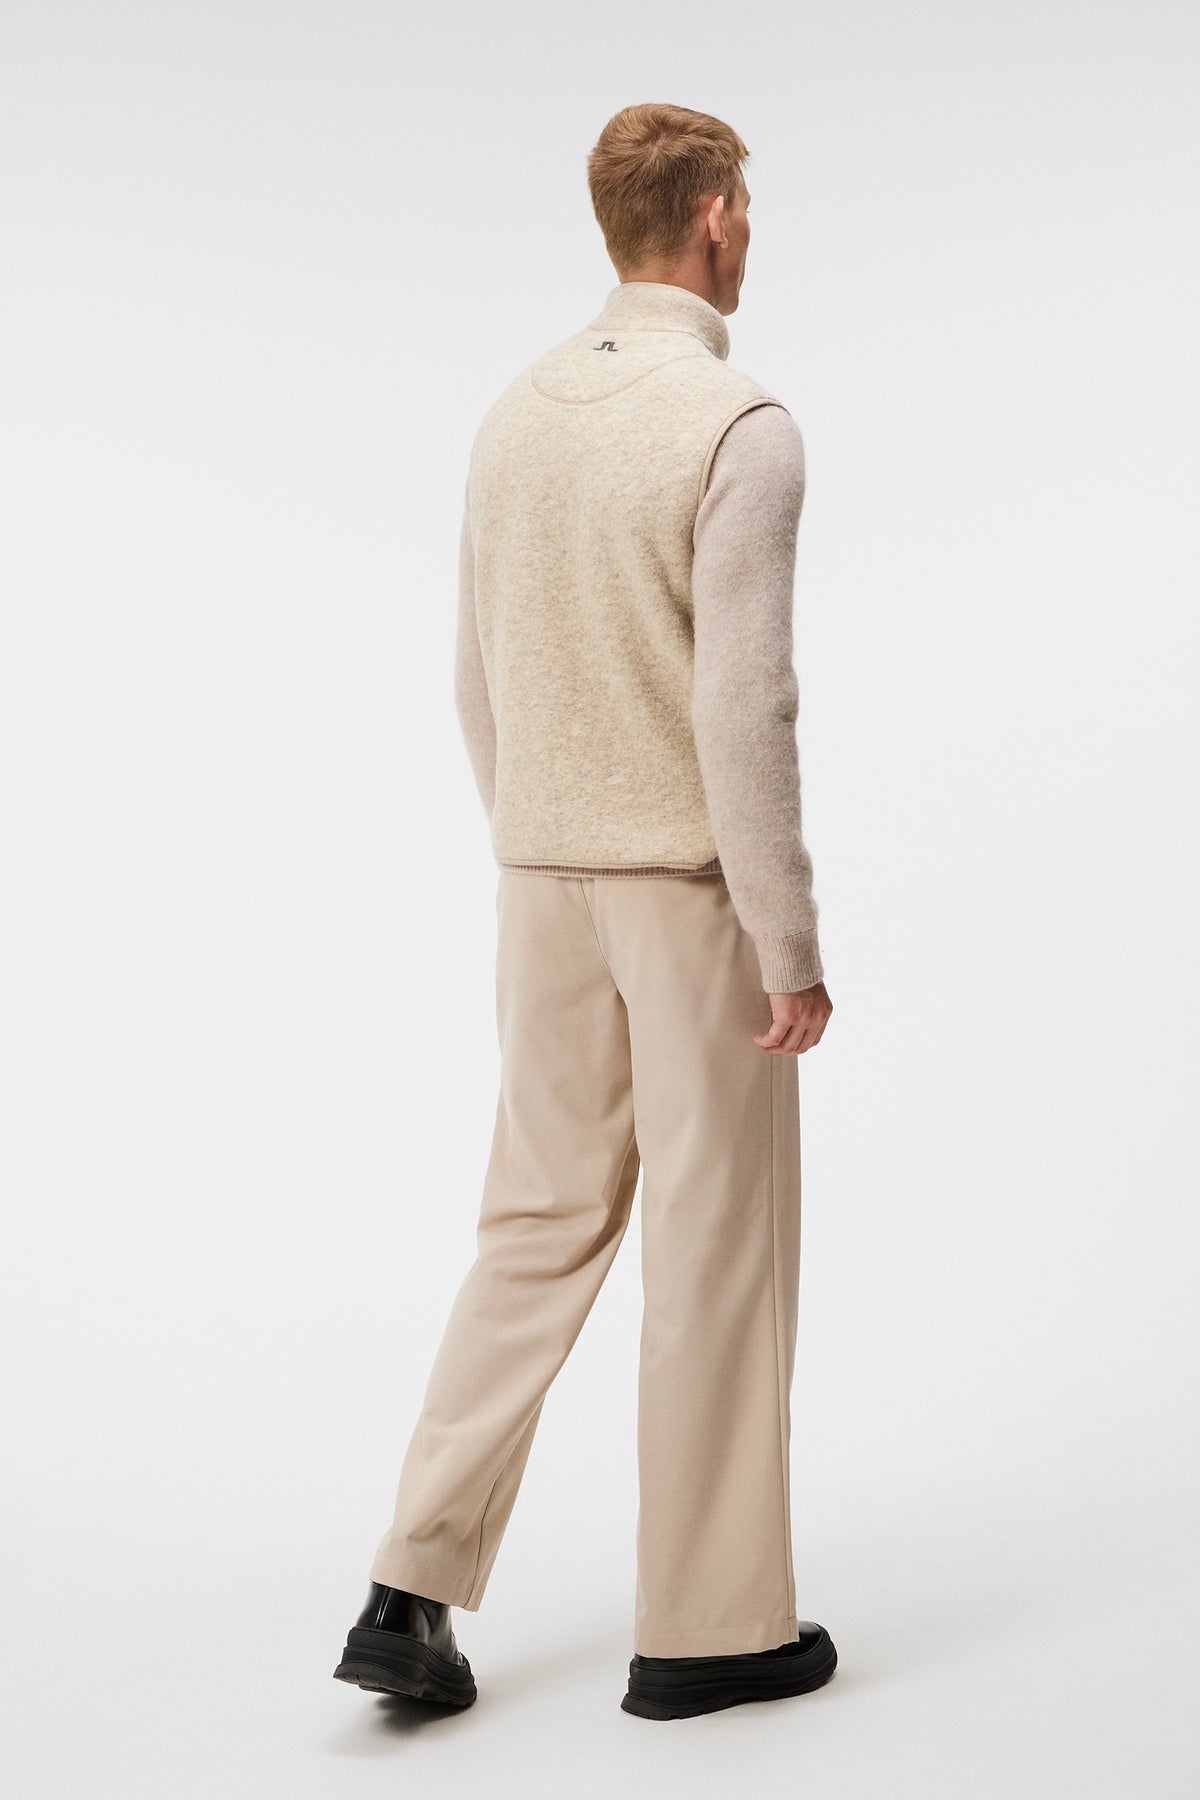 Duncan Wool Fleece Vest / Oyster Gray